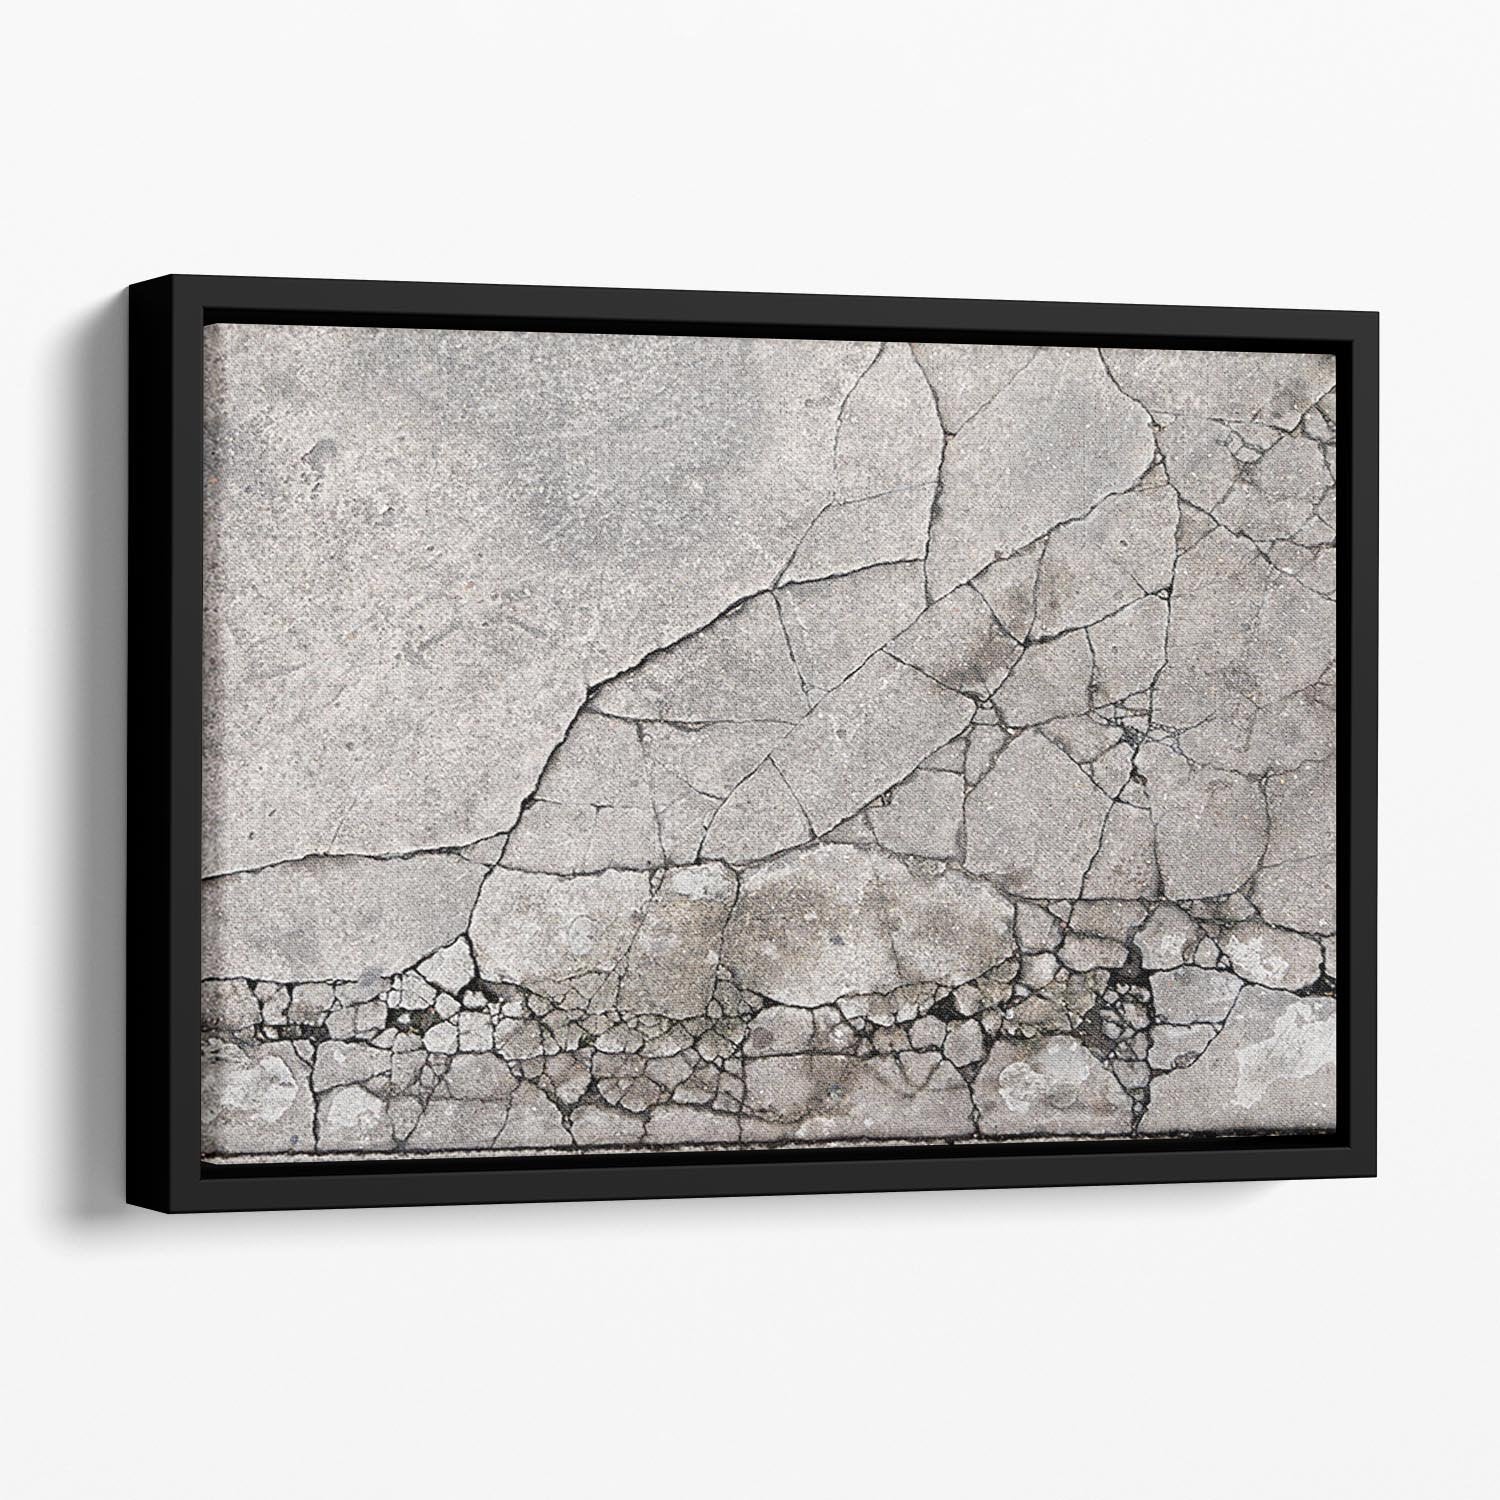 Cracked concrete Floating Framed Canvas - Canvas Art Rocks - 1